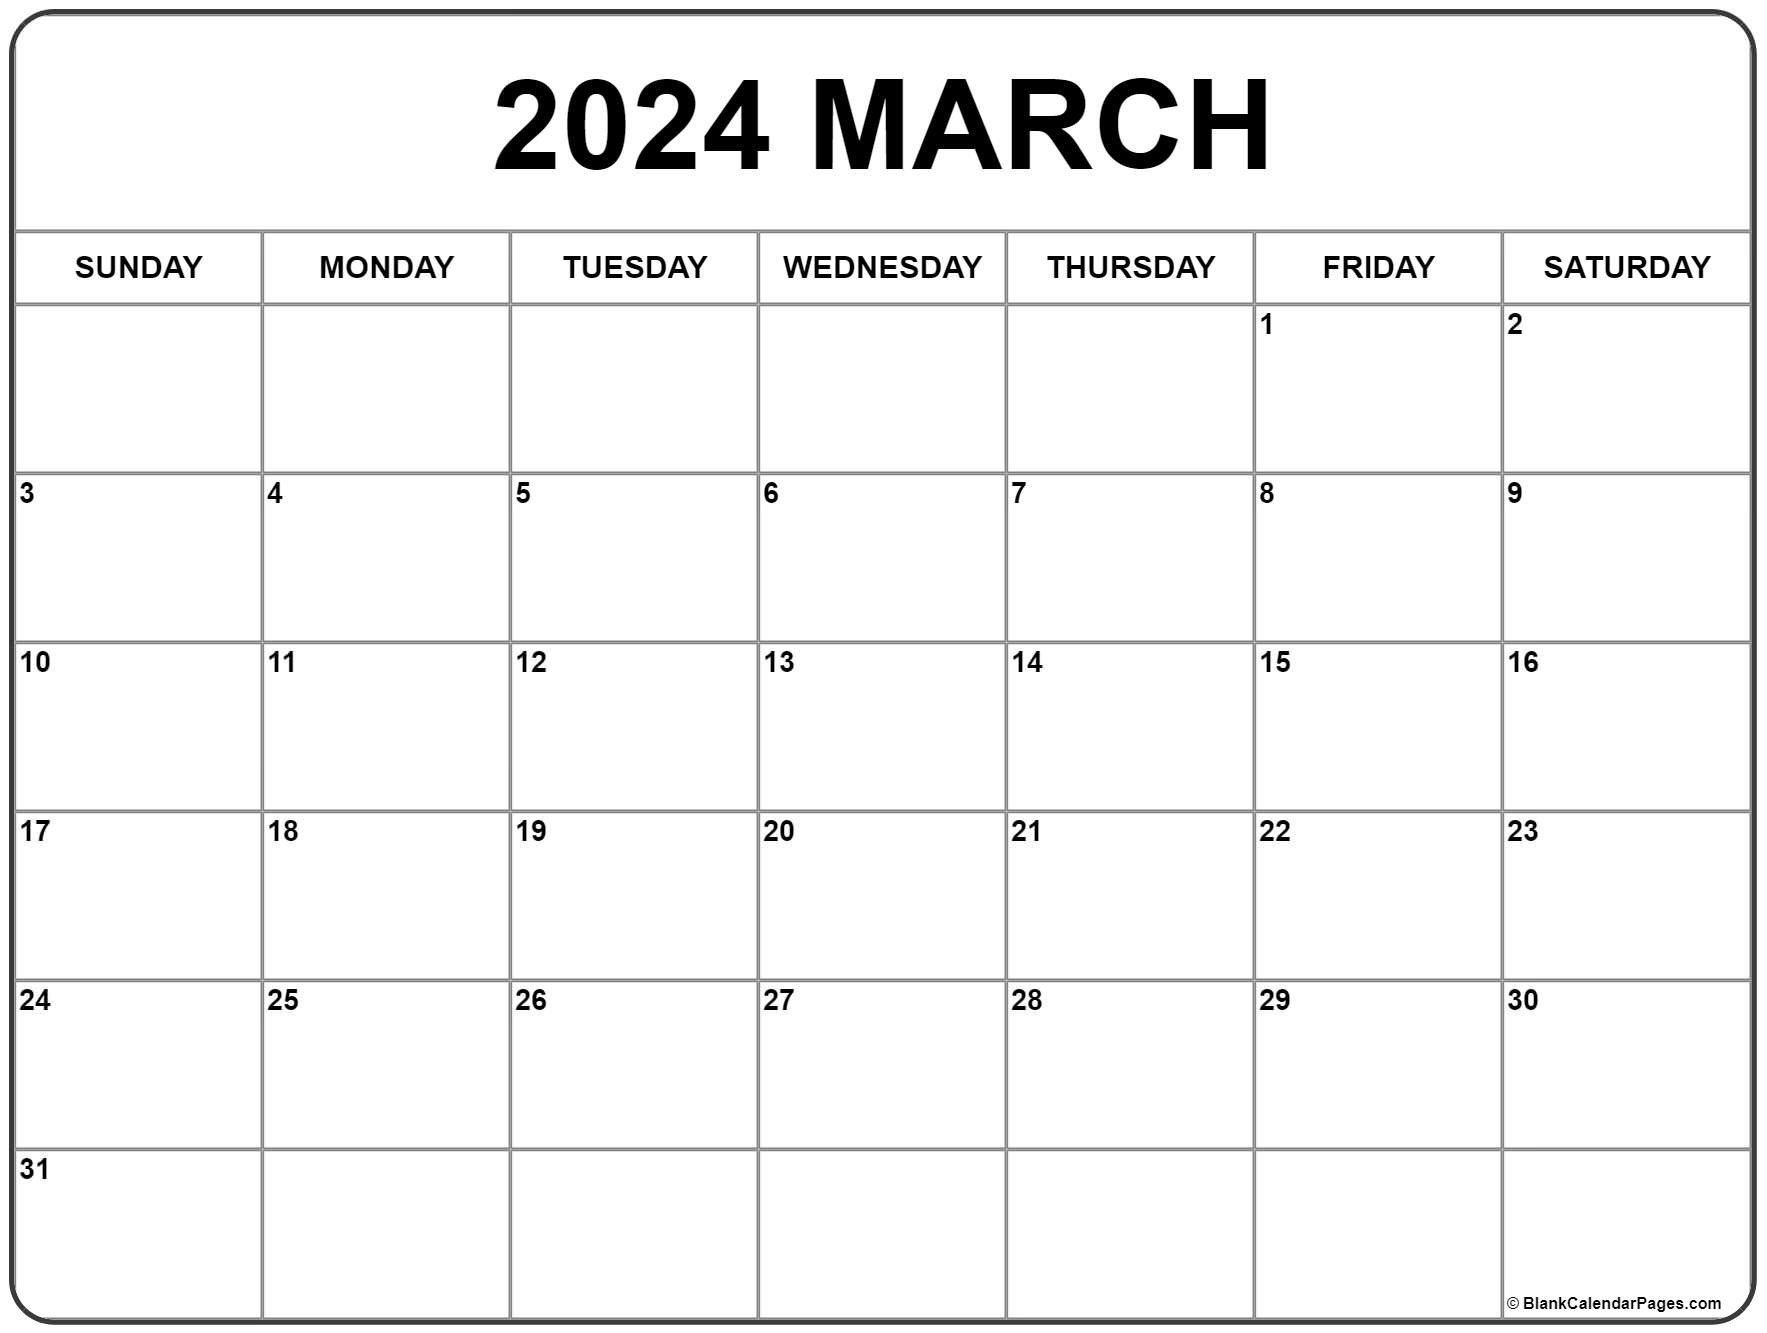 March 2024 Calendar | Free Printable Calendar for 2024 March Calendar Printable Free